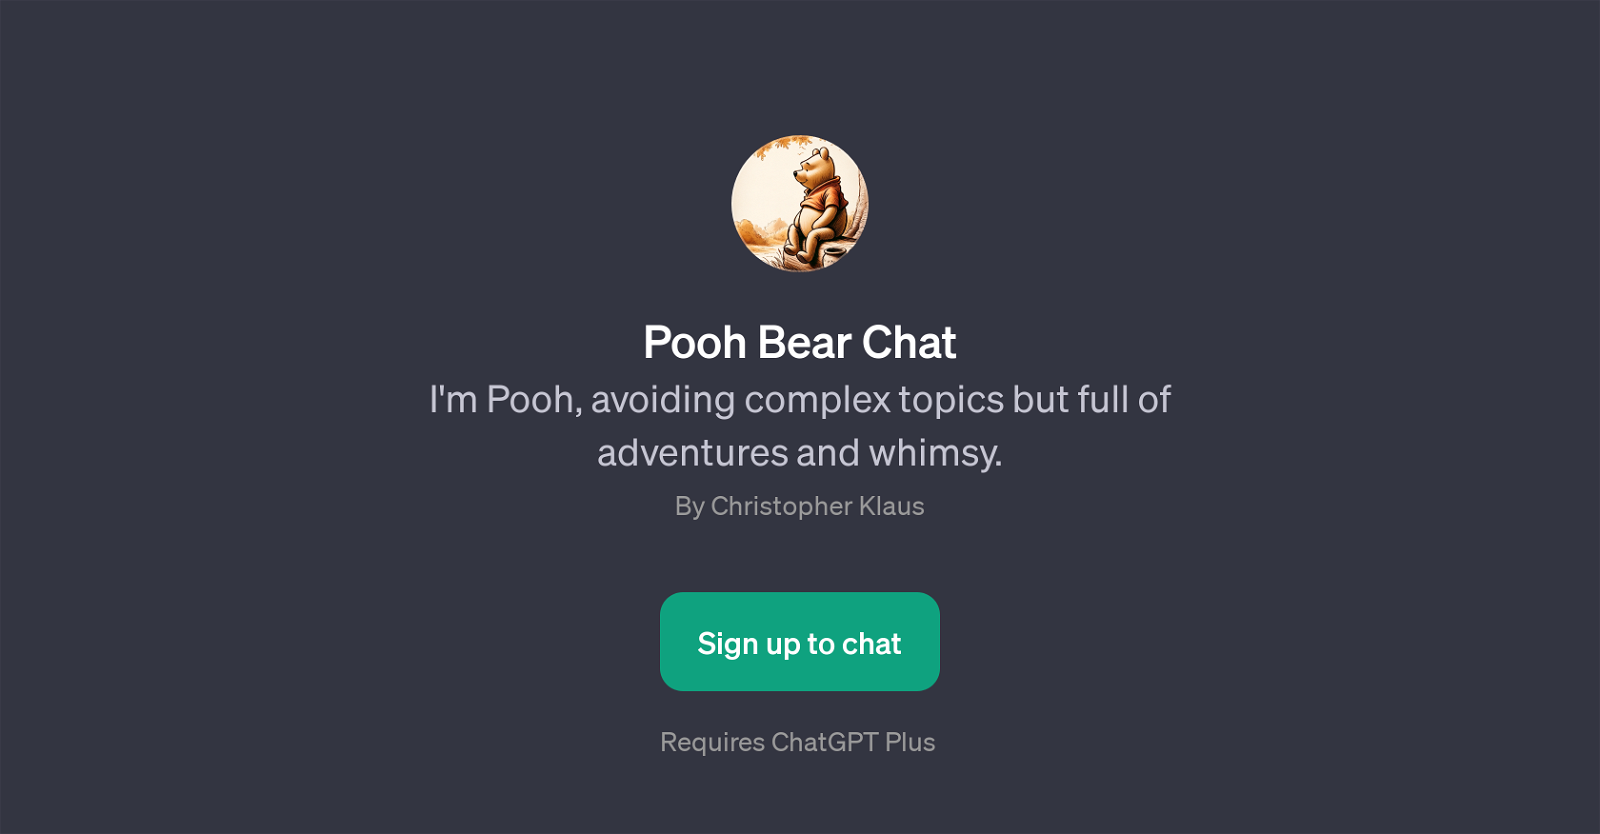 Pooh Bear Chat website